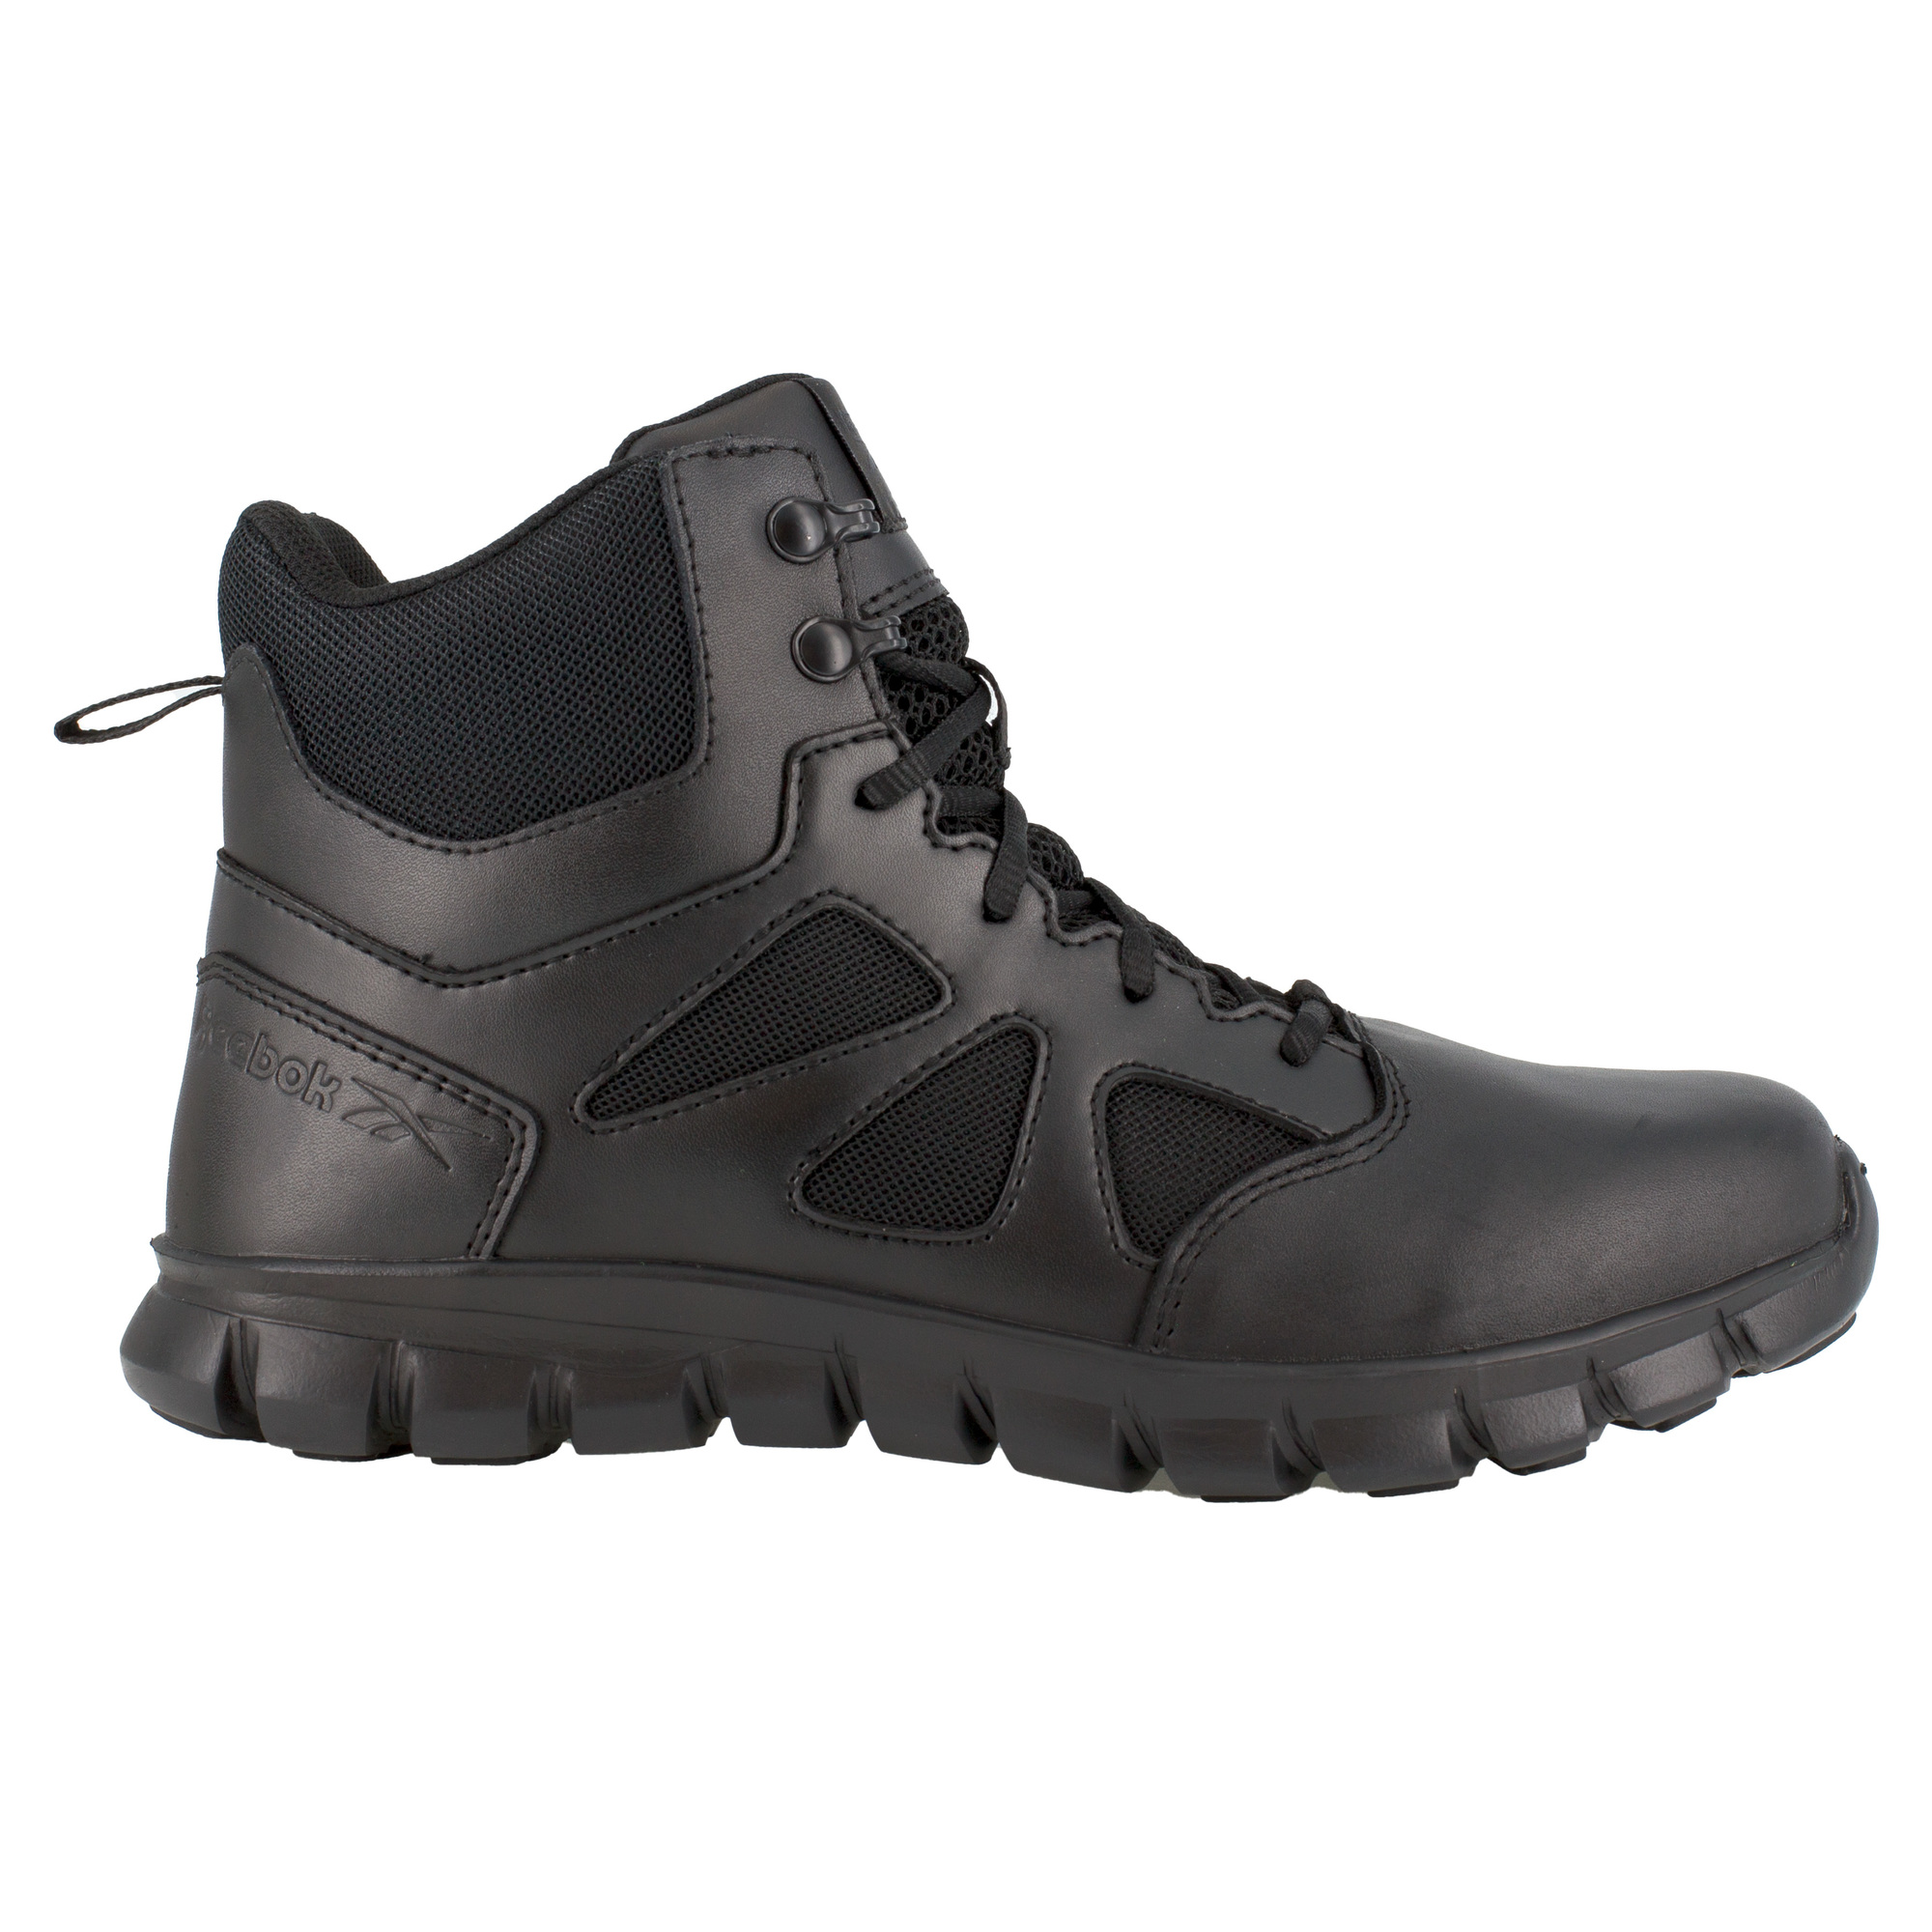 Reebok, 6Inch Tactical Boot w/Side Zipper, Size 10, Width Medium, Color Black, Model RB086